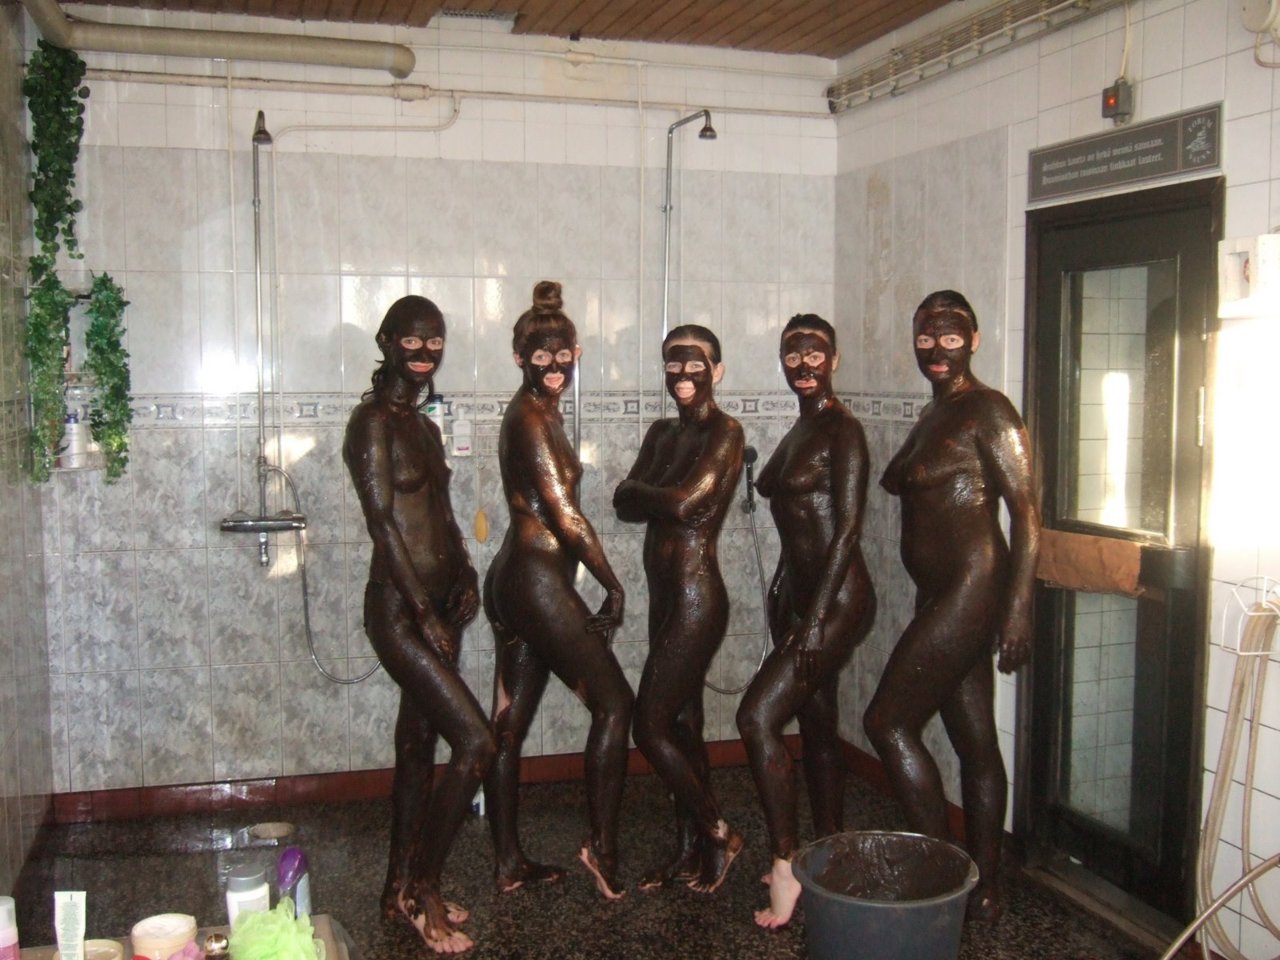 https://www.nudismlife.com/galleries/nudists_and_nude/nudists_various/Nudists_nude_naturists_tumblr_407.jpg